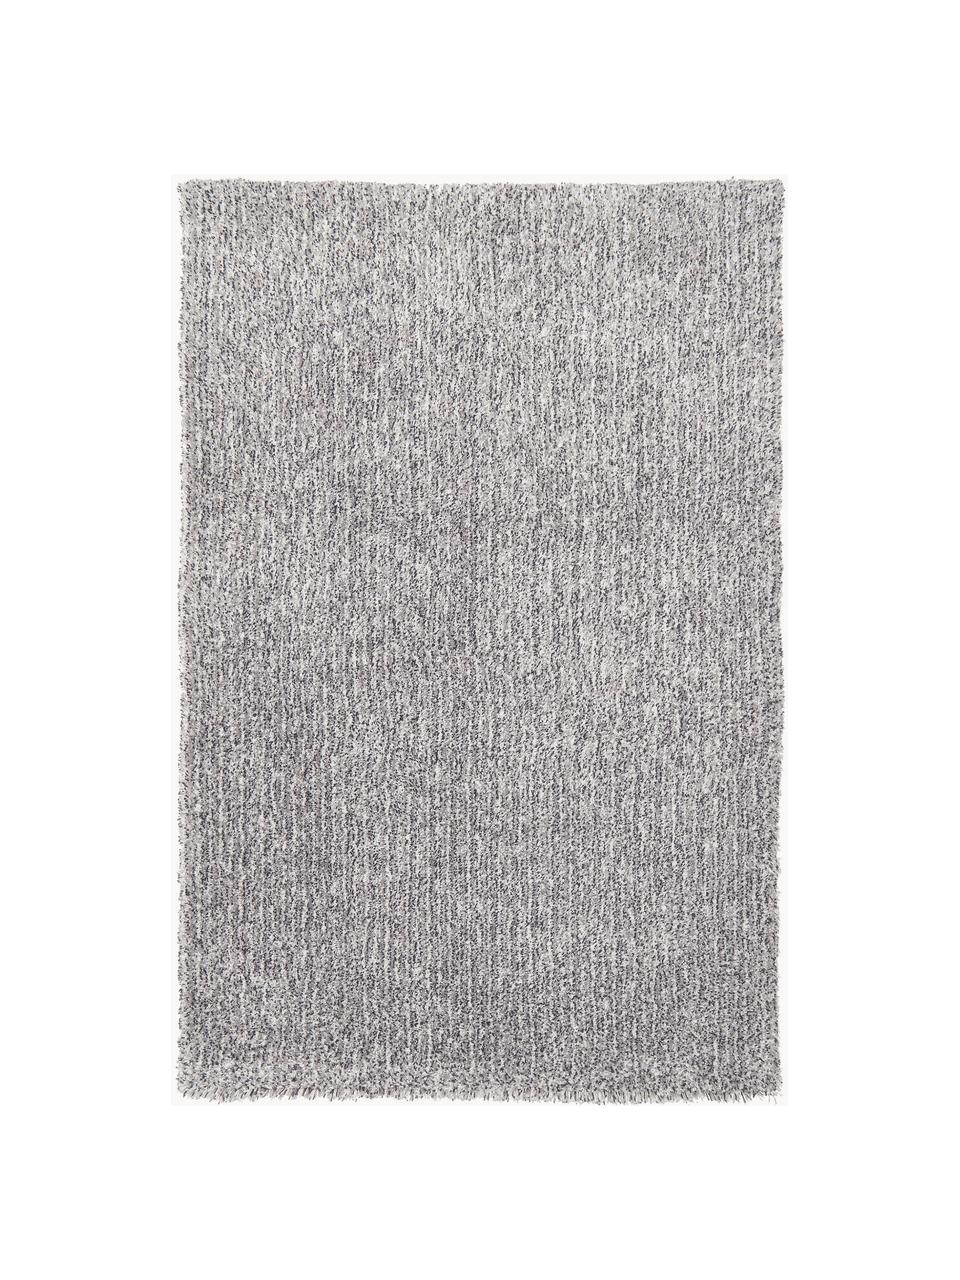 Flauschiger Melange Hochflor-Teppich Marsha, Flor: 100 % Polyester, Grau, B 80 x L 150 cm (Grösse XS)